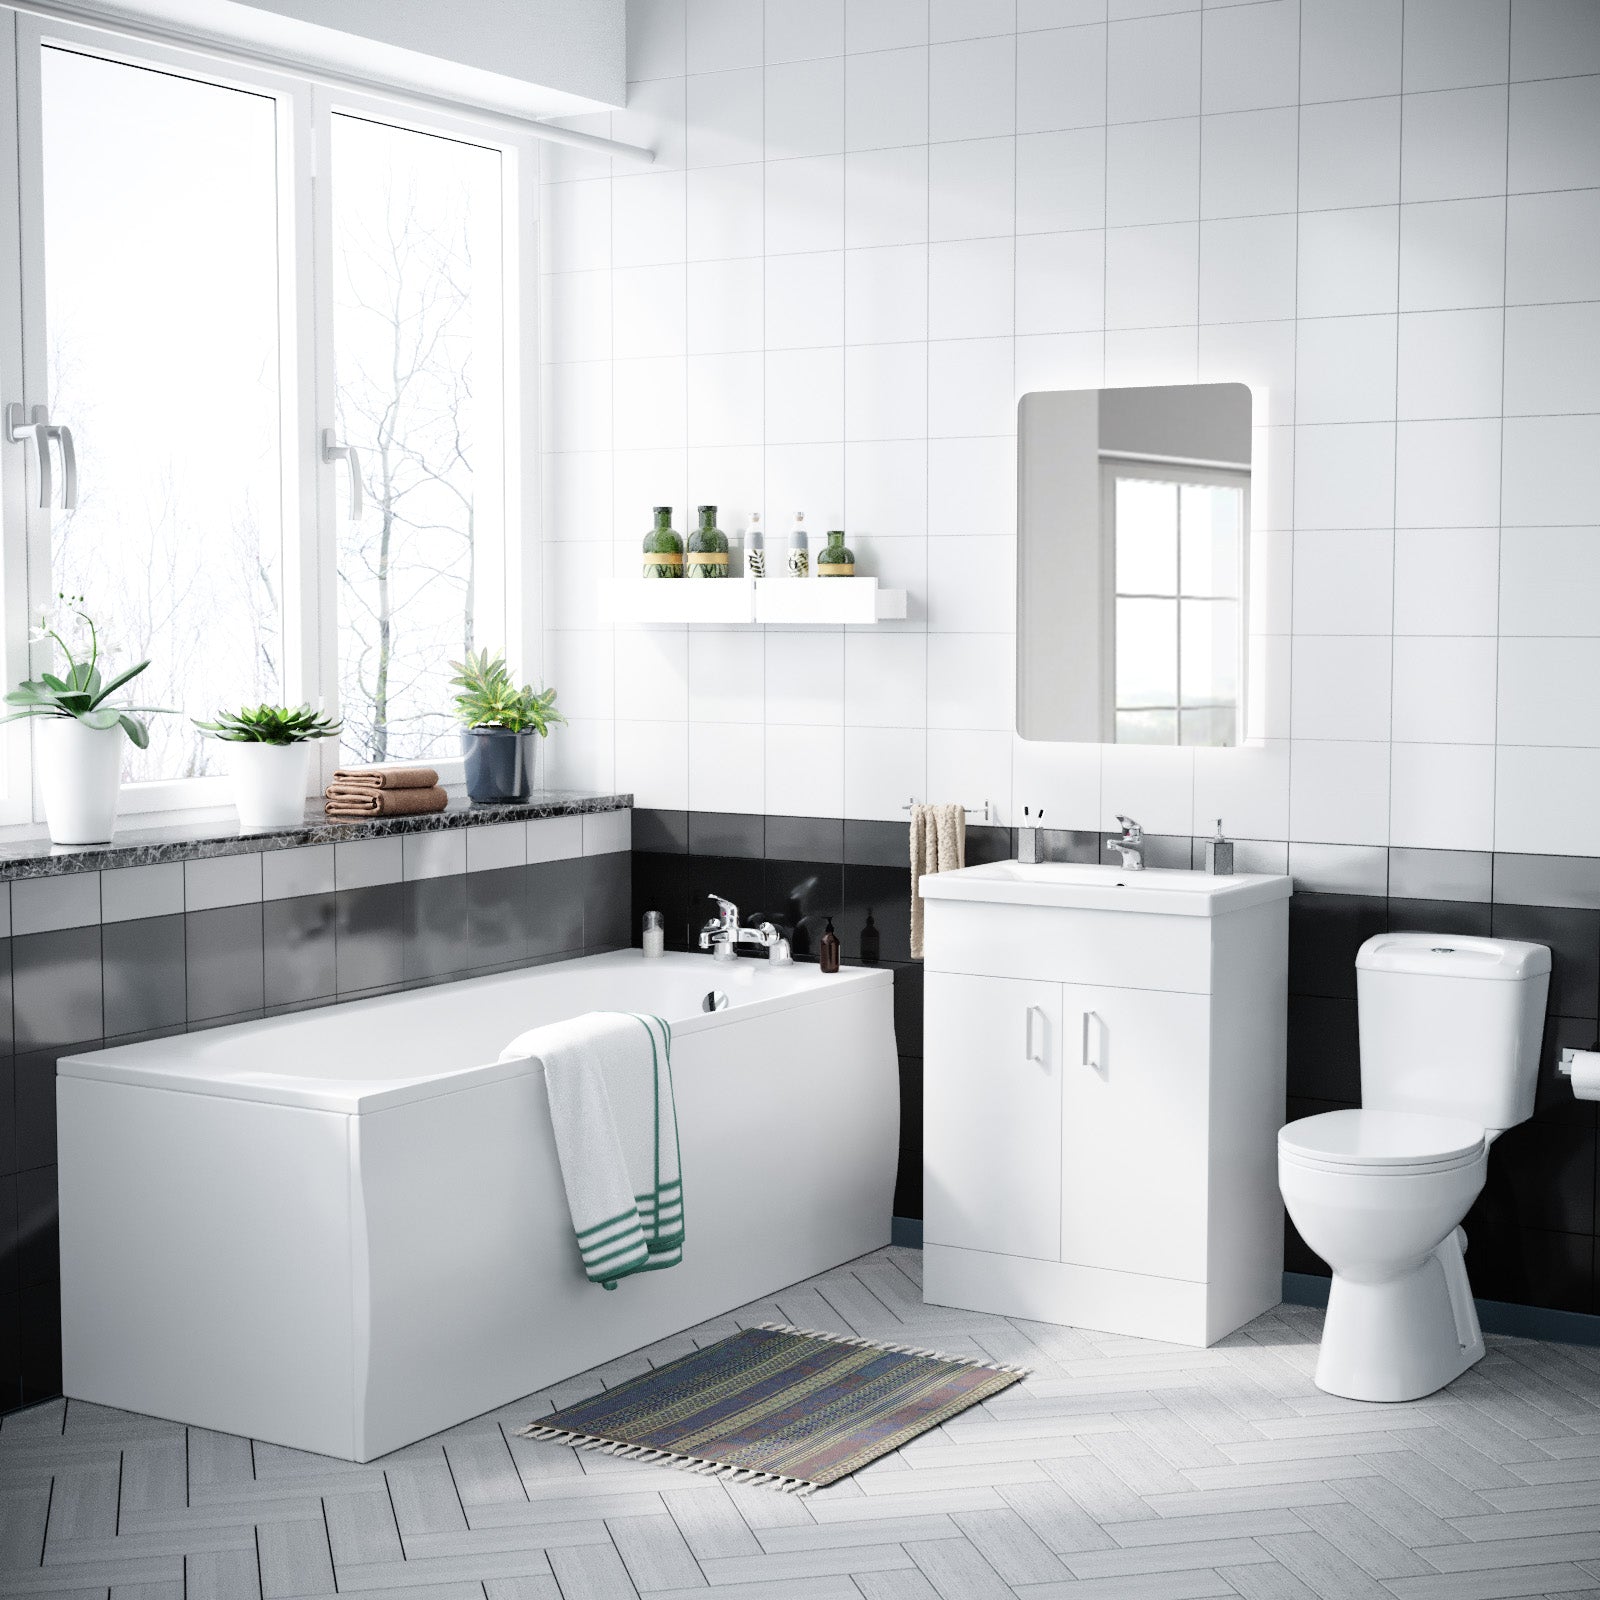 Nanuya 1700mm Bath, WC Toilet & Flat Pack 600 mm White Vanity Cabinet